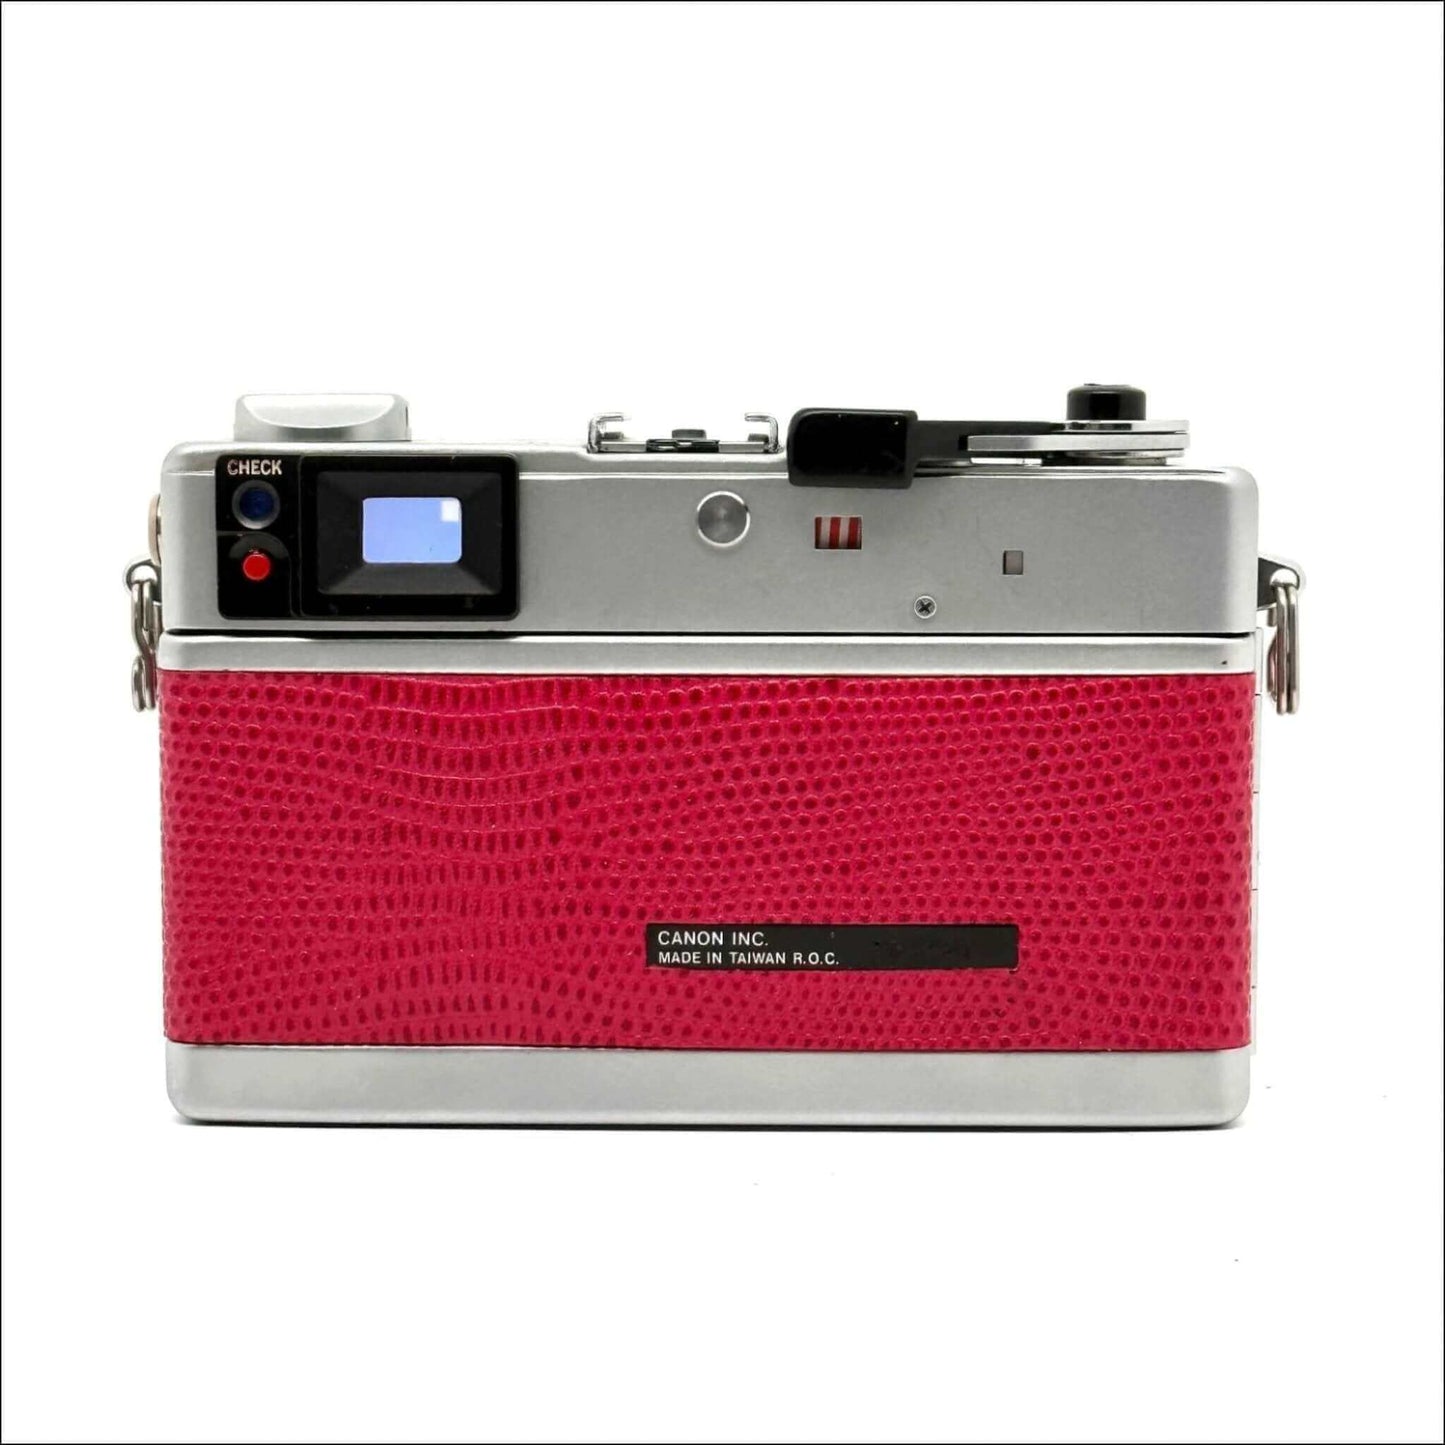 Canon Canonet Ql 17 Giii Used 35mm Rangefinder Pink Film